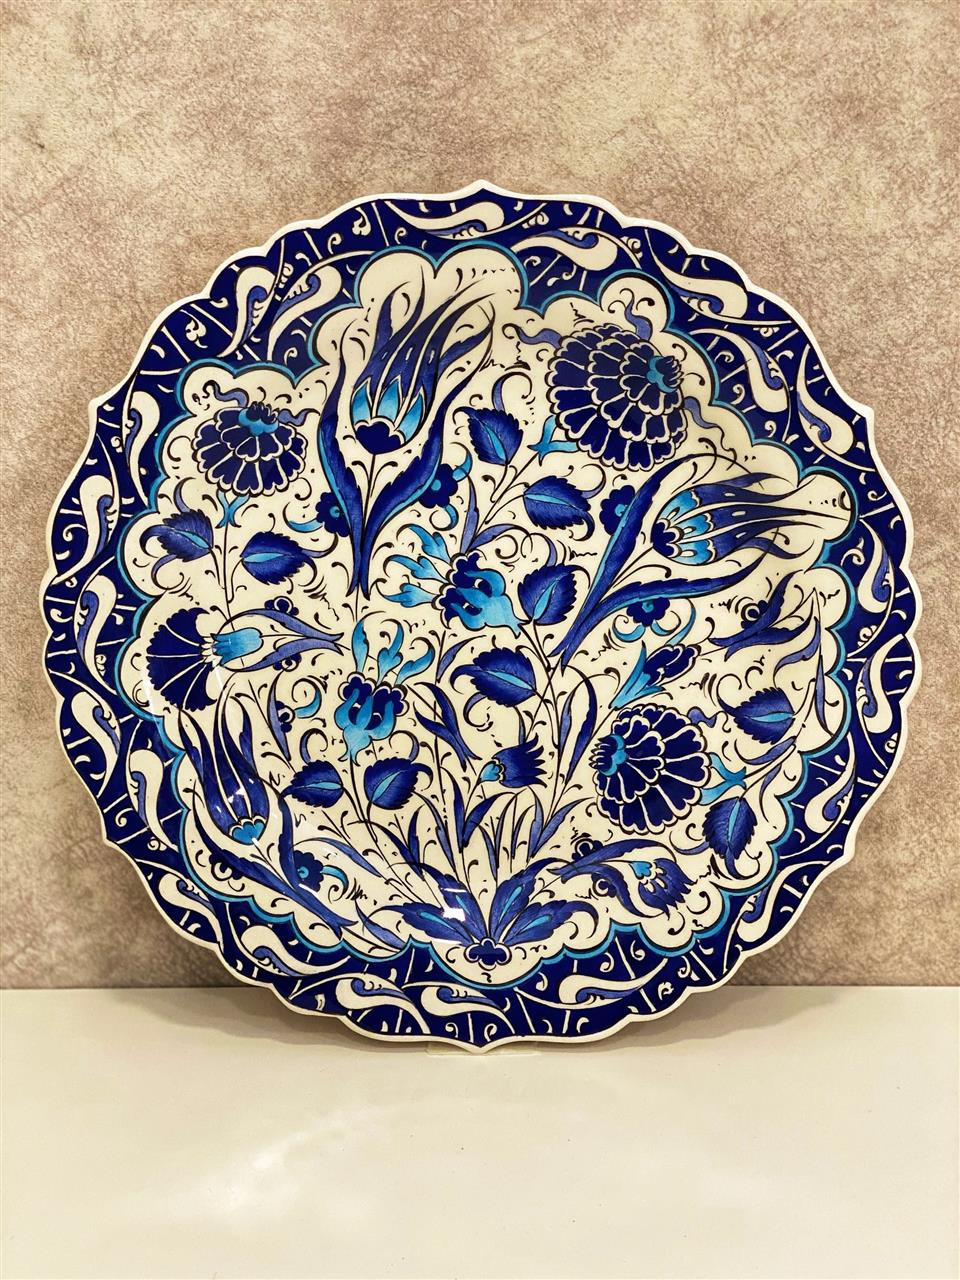 12/'/' Handmade Turkish Ceramic Plate,Ceramic Wall Plate,Pottery Hanging Plate,Decorative Ceramic Plate,Decorative Plates For Hanging,Wall Art